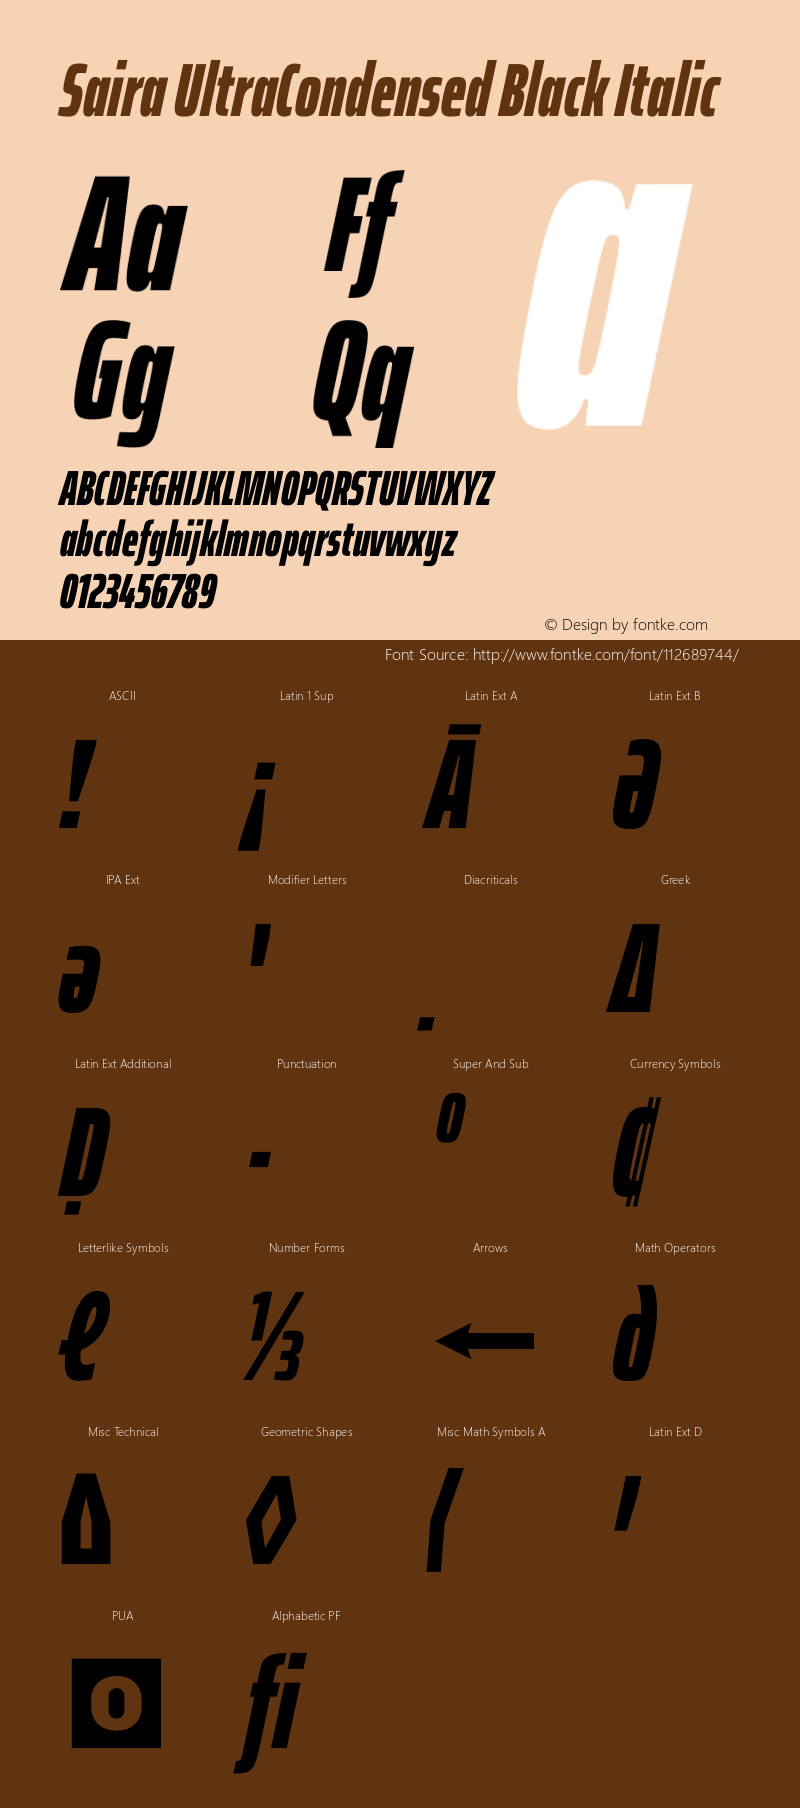 Saira UltraCondensed Black Italic Version 1.100 Font Sample